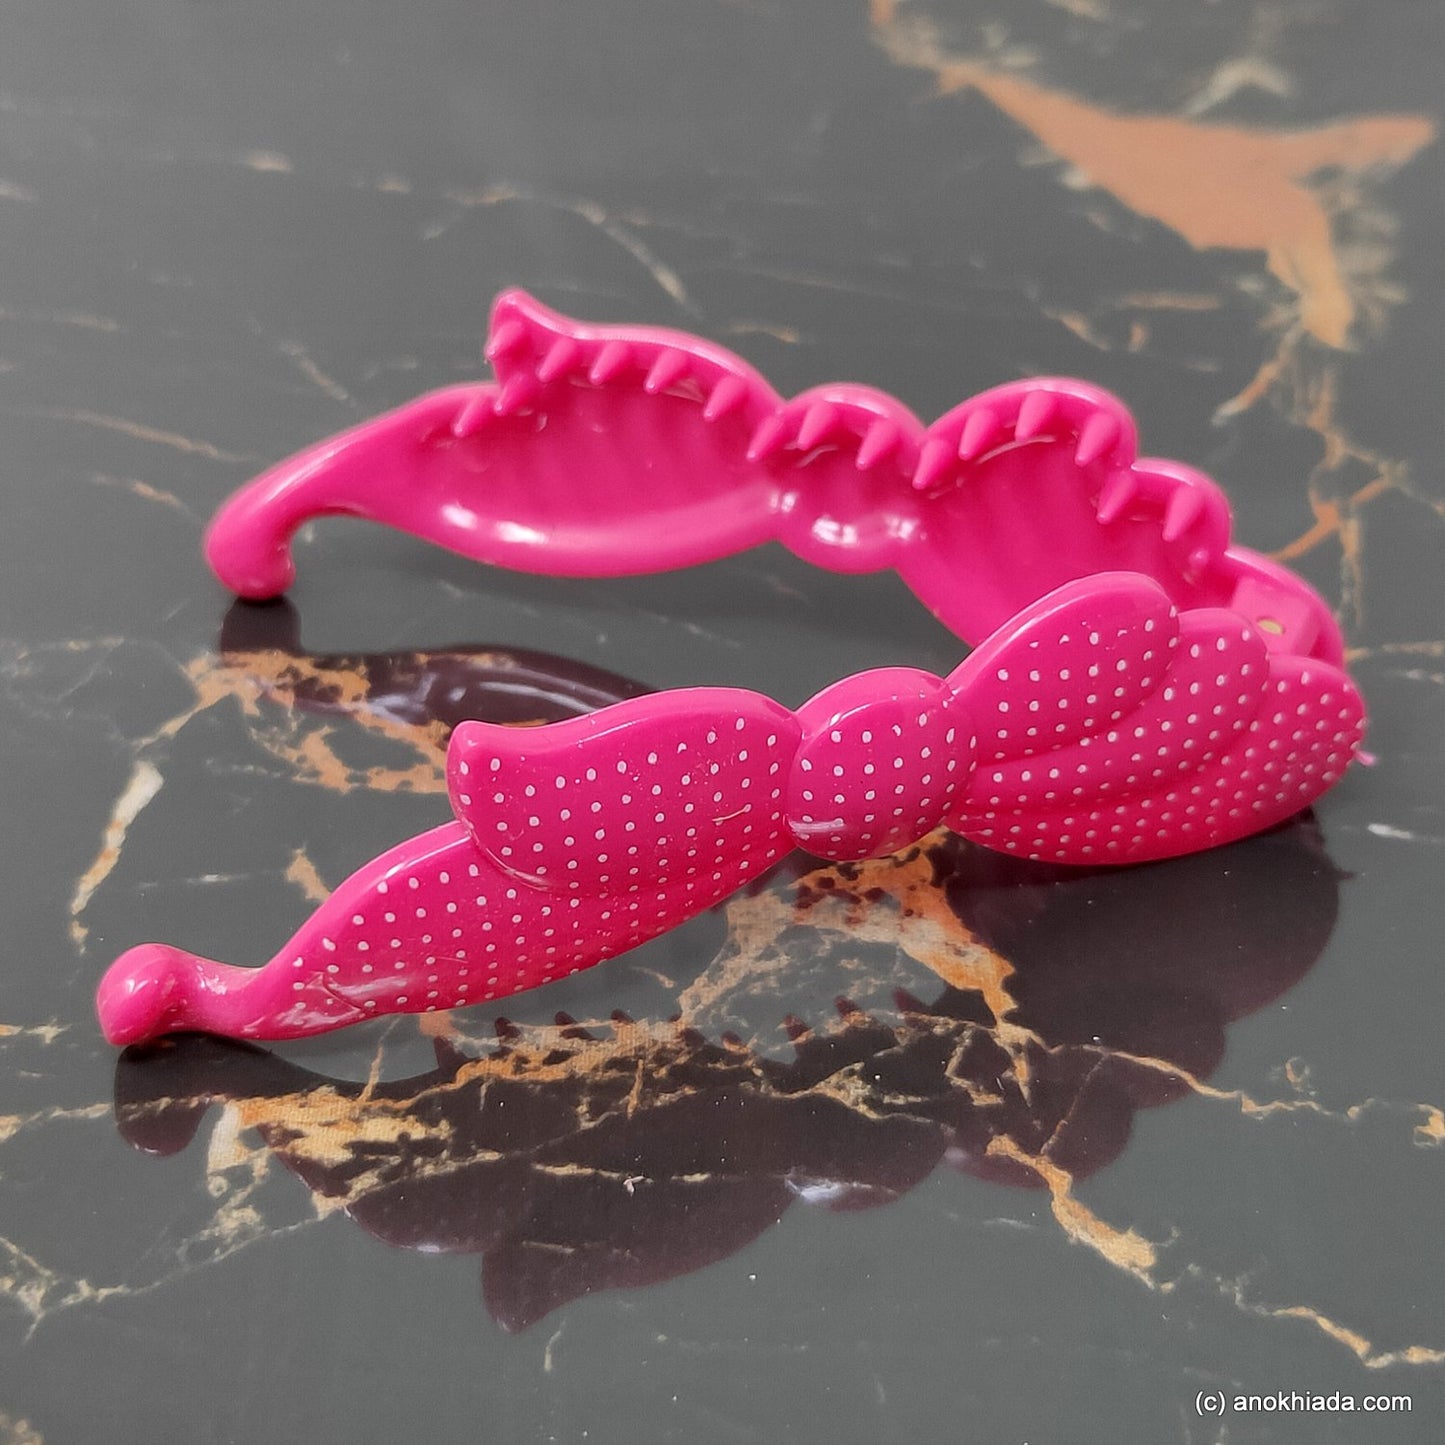 Butterfly Design Small Hot Pink Banana Hair Clip for Girls & Woman (98-16l Banana Hair Clips)